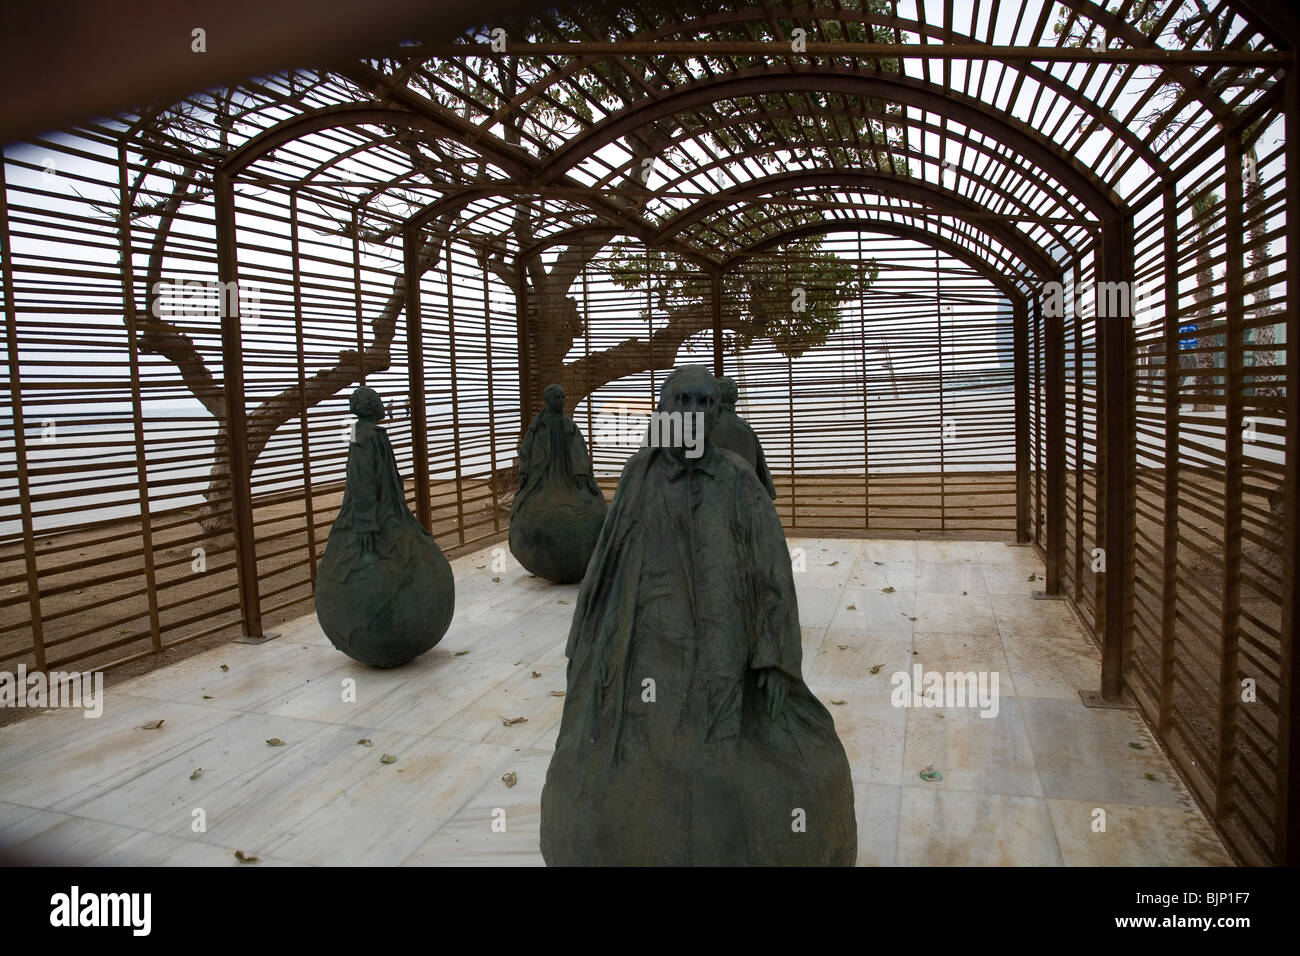 'Una habitacion donde siempre llueve' (A room were it always rains) - Sculpture by Juan Muñoz - Barceloneta Stock Photo